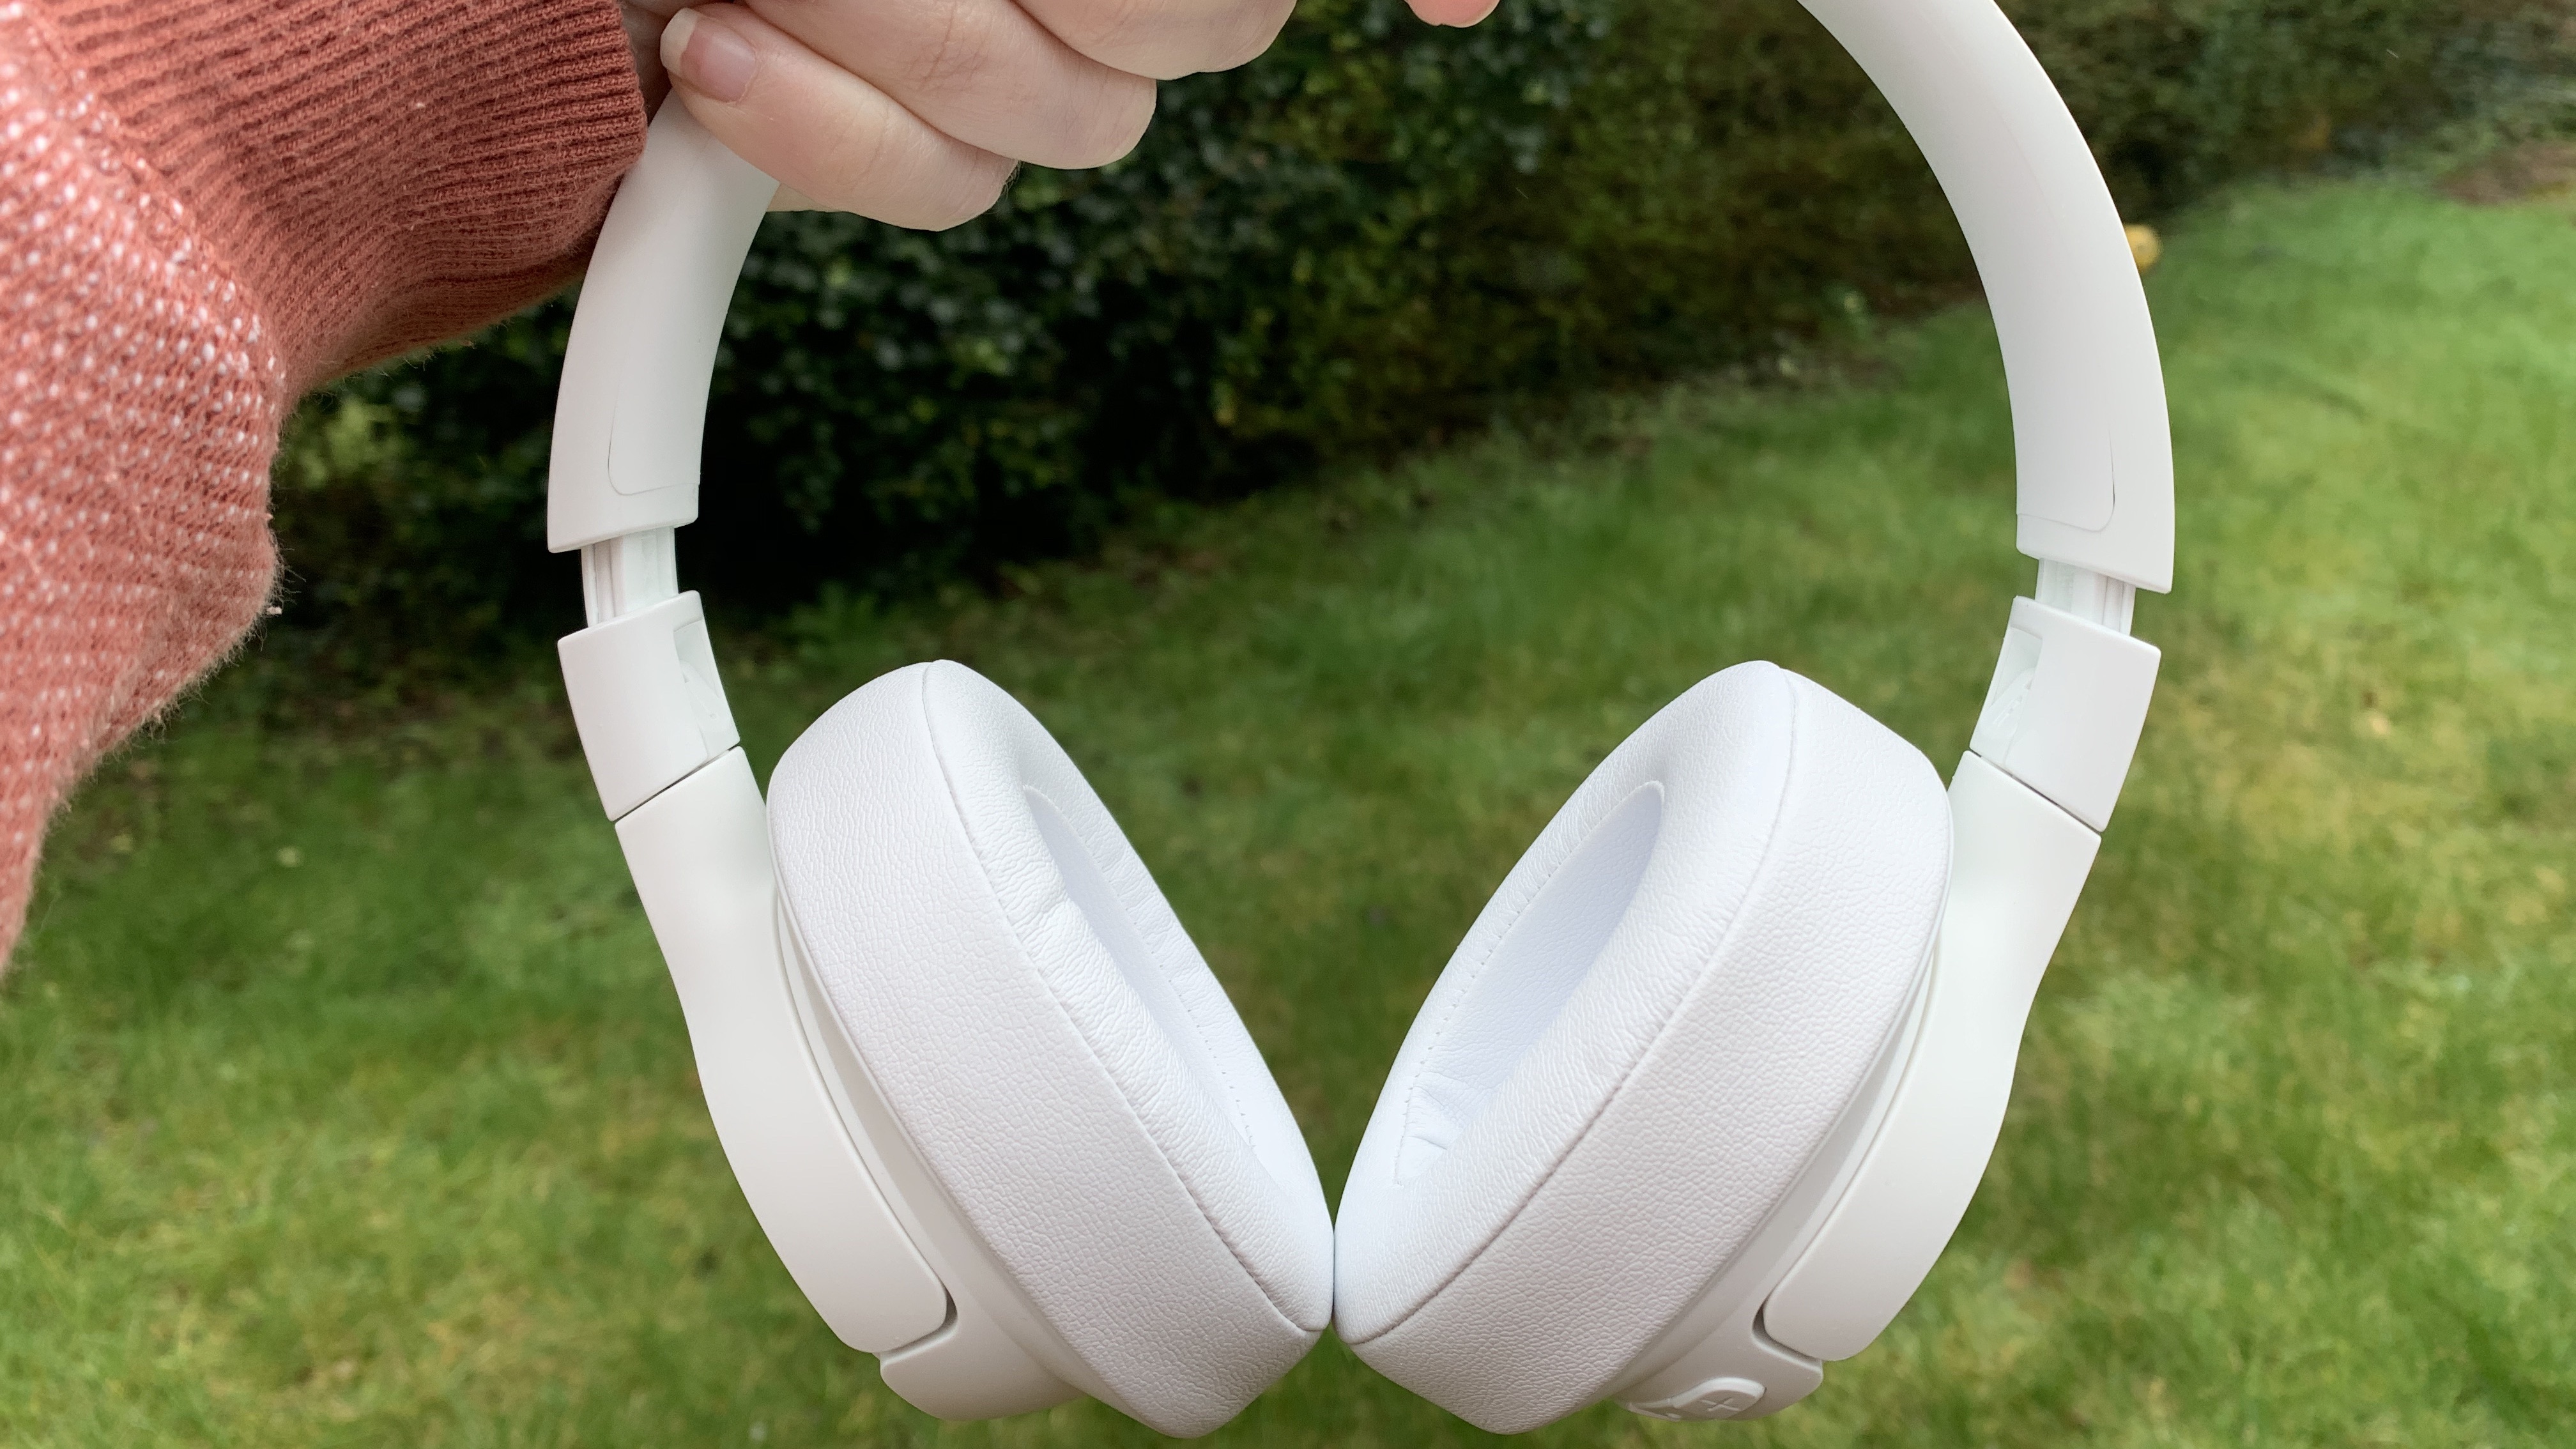 Tampilan dekat headphone on-ear jbl tune 750btnc berwarna putih dengan latar belakang rumput